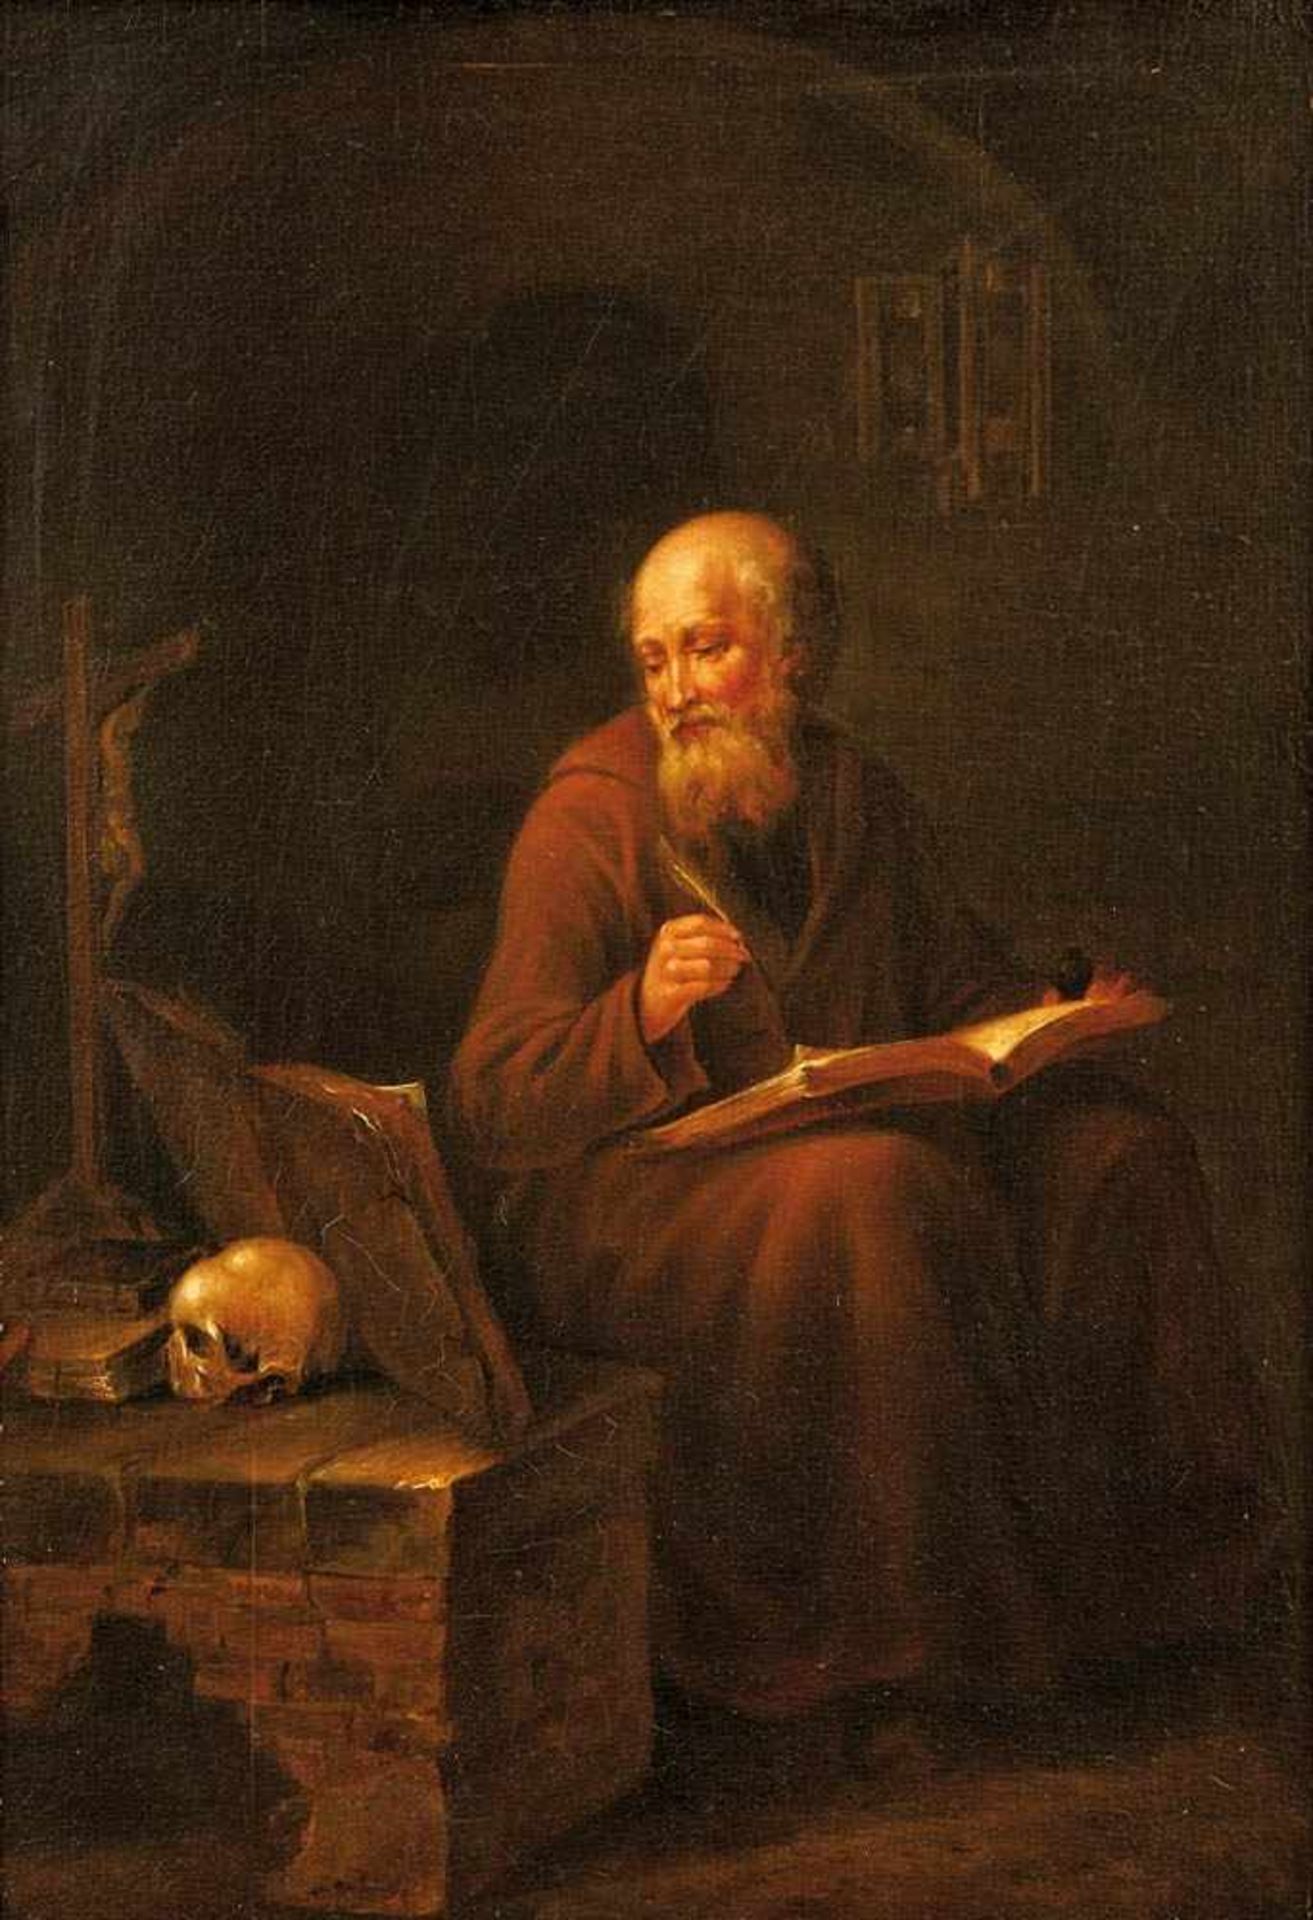 Saint Jerome as Bible translator18th century.Oil on canvas. 51 x 35.5 cm.Heiliger als